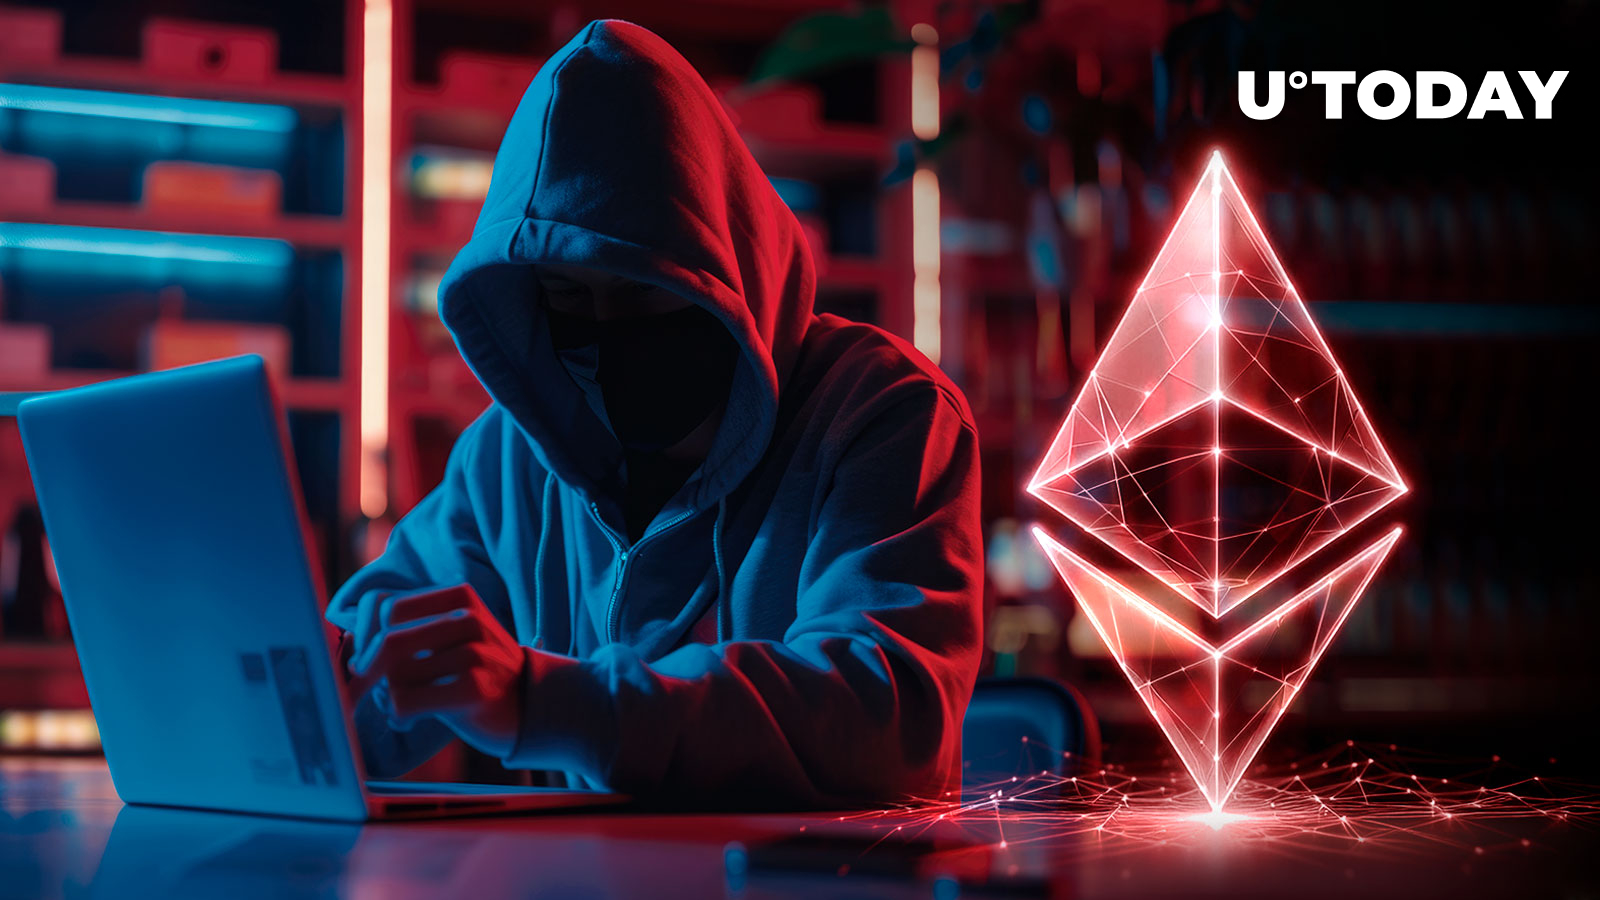 Parity Wallet Hacker Moves  Million in Ethereum, Leaving 6 Million in Limbo